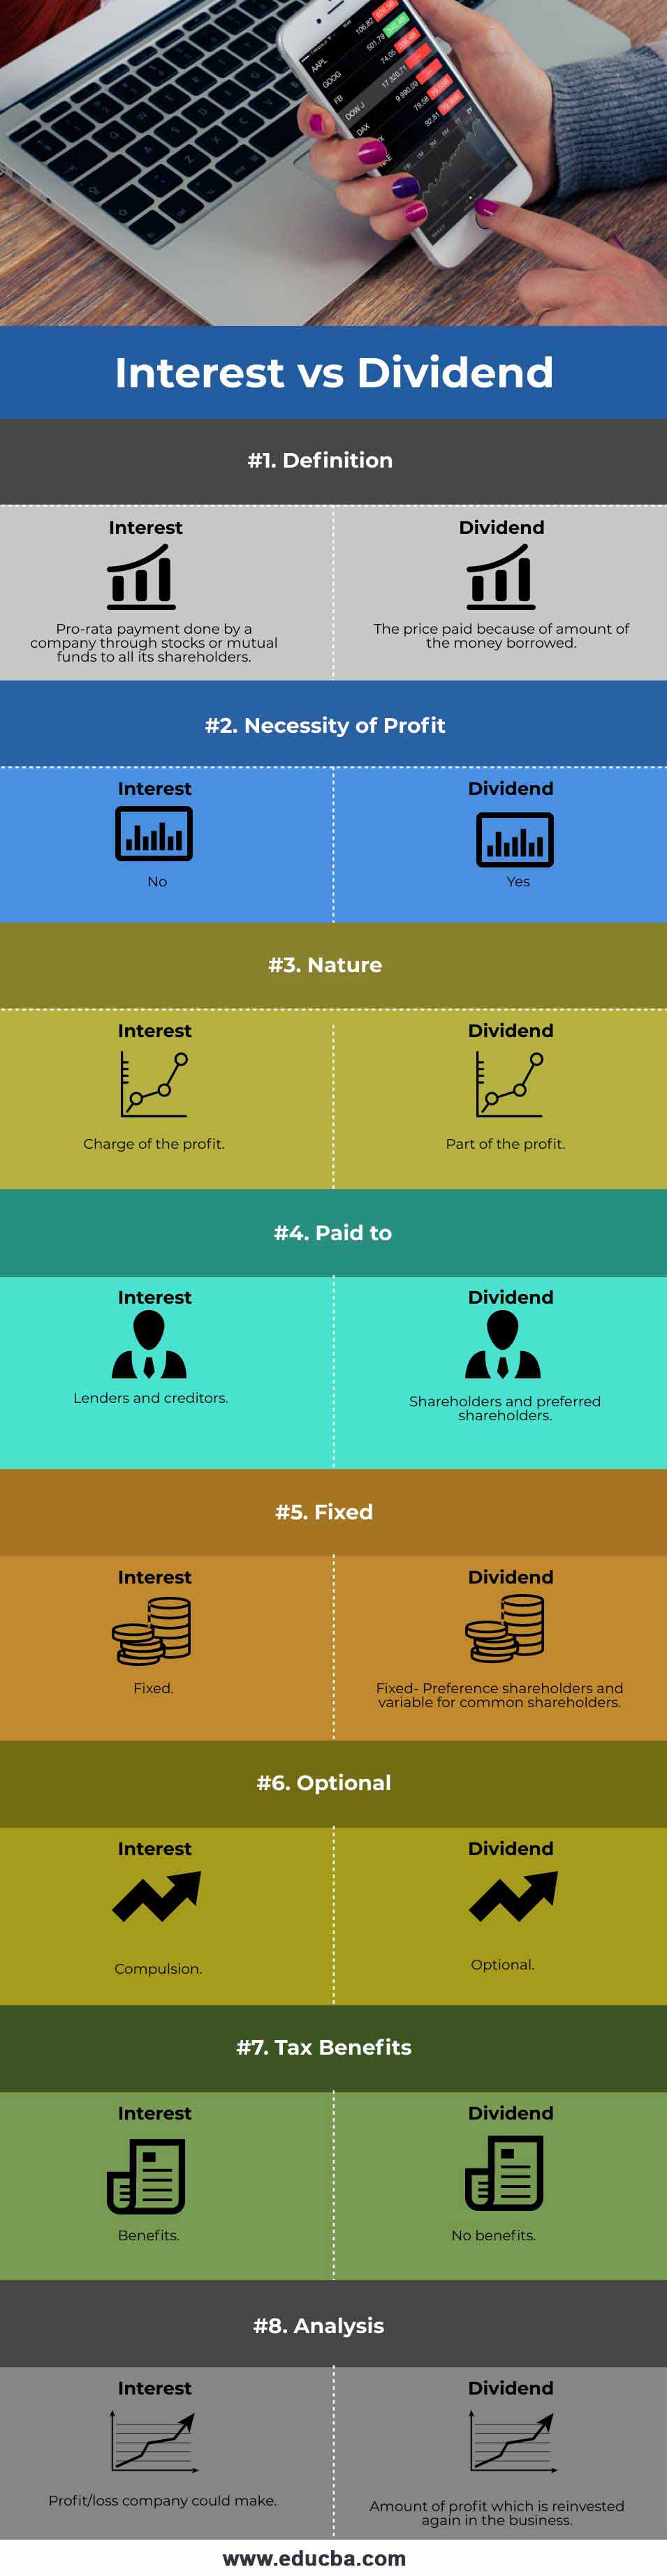 Interest vs Dividend infographic